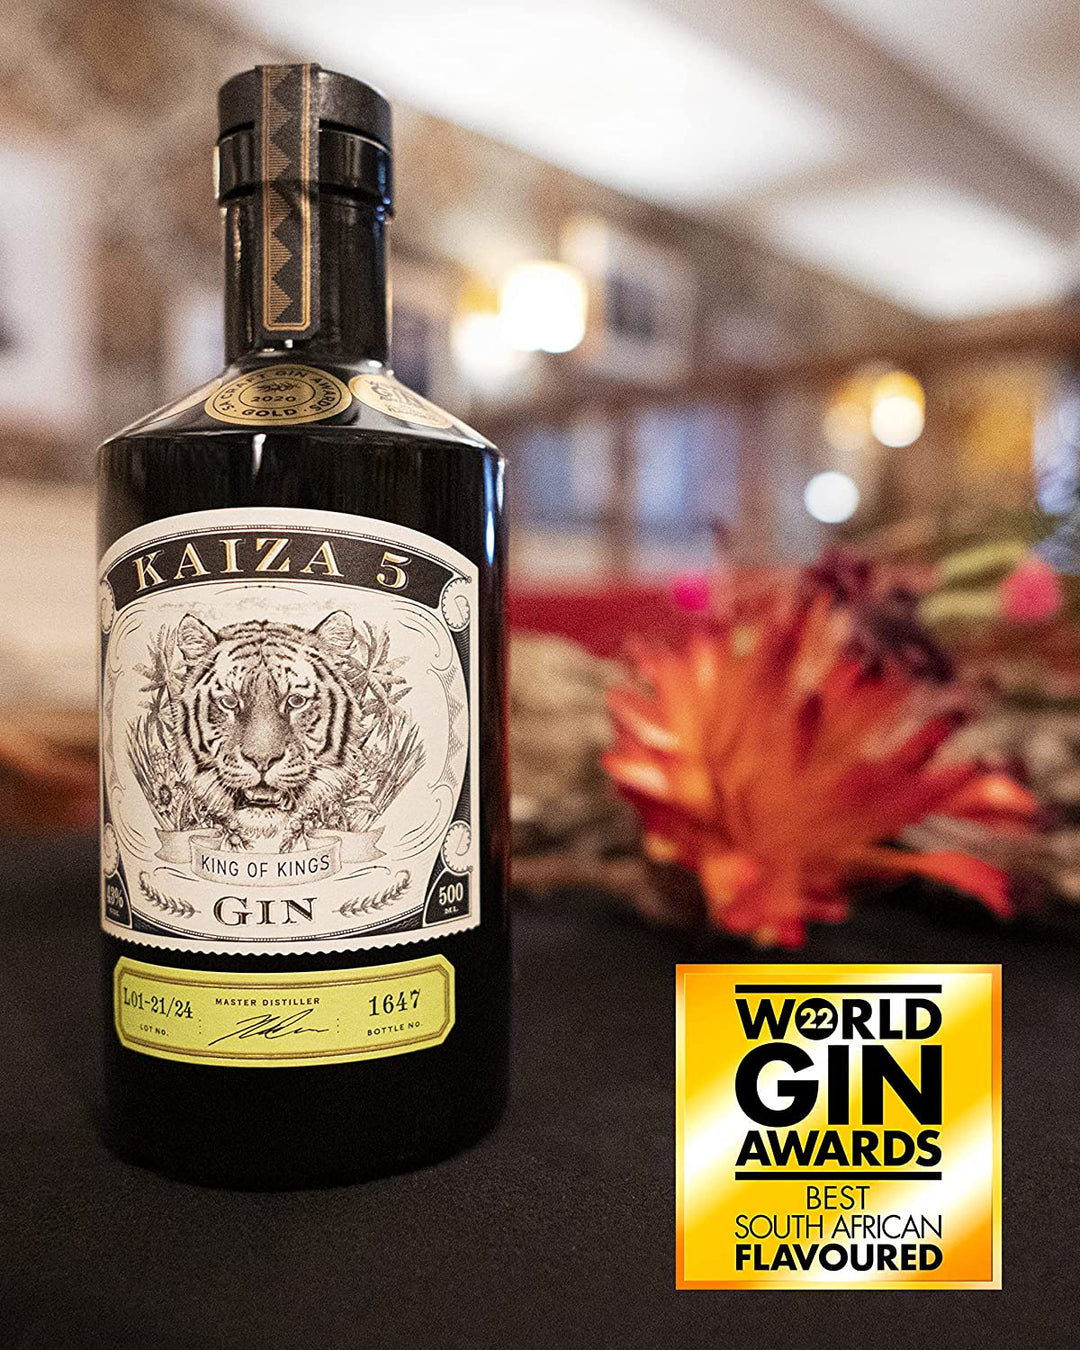 KAIZA 5 GIN – 0,5 L - 43% - Höchst prämierter Gin aus Südafrika/Kapstadt